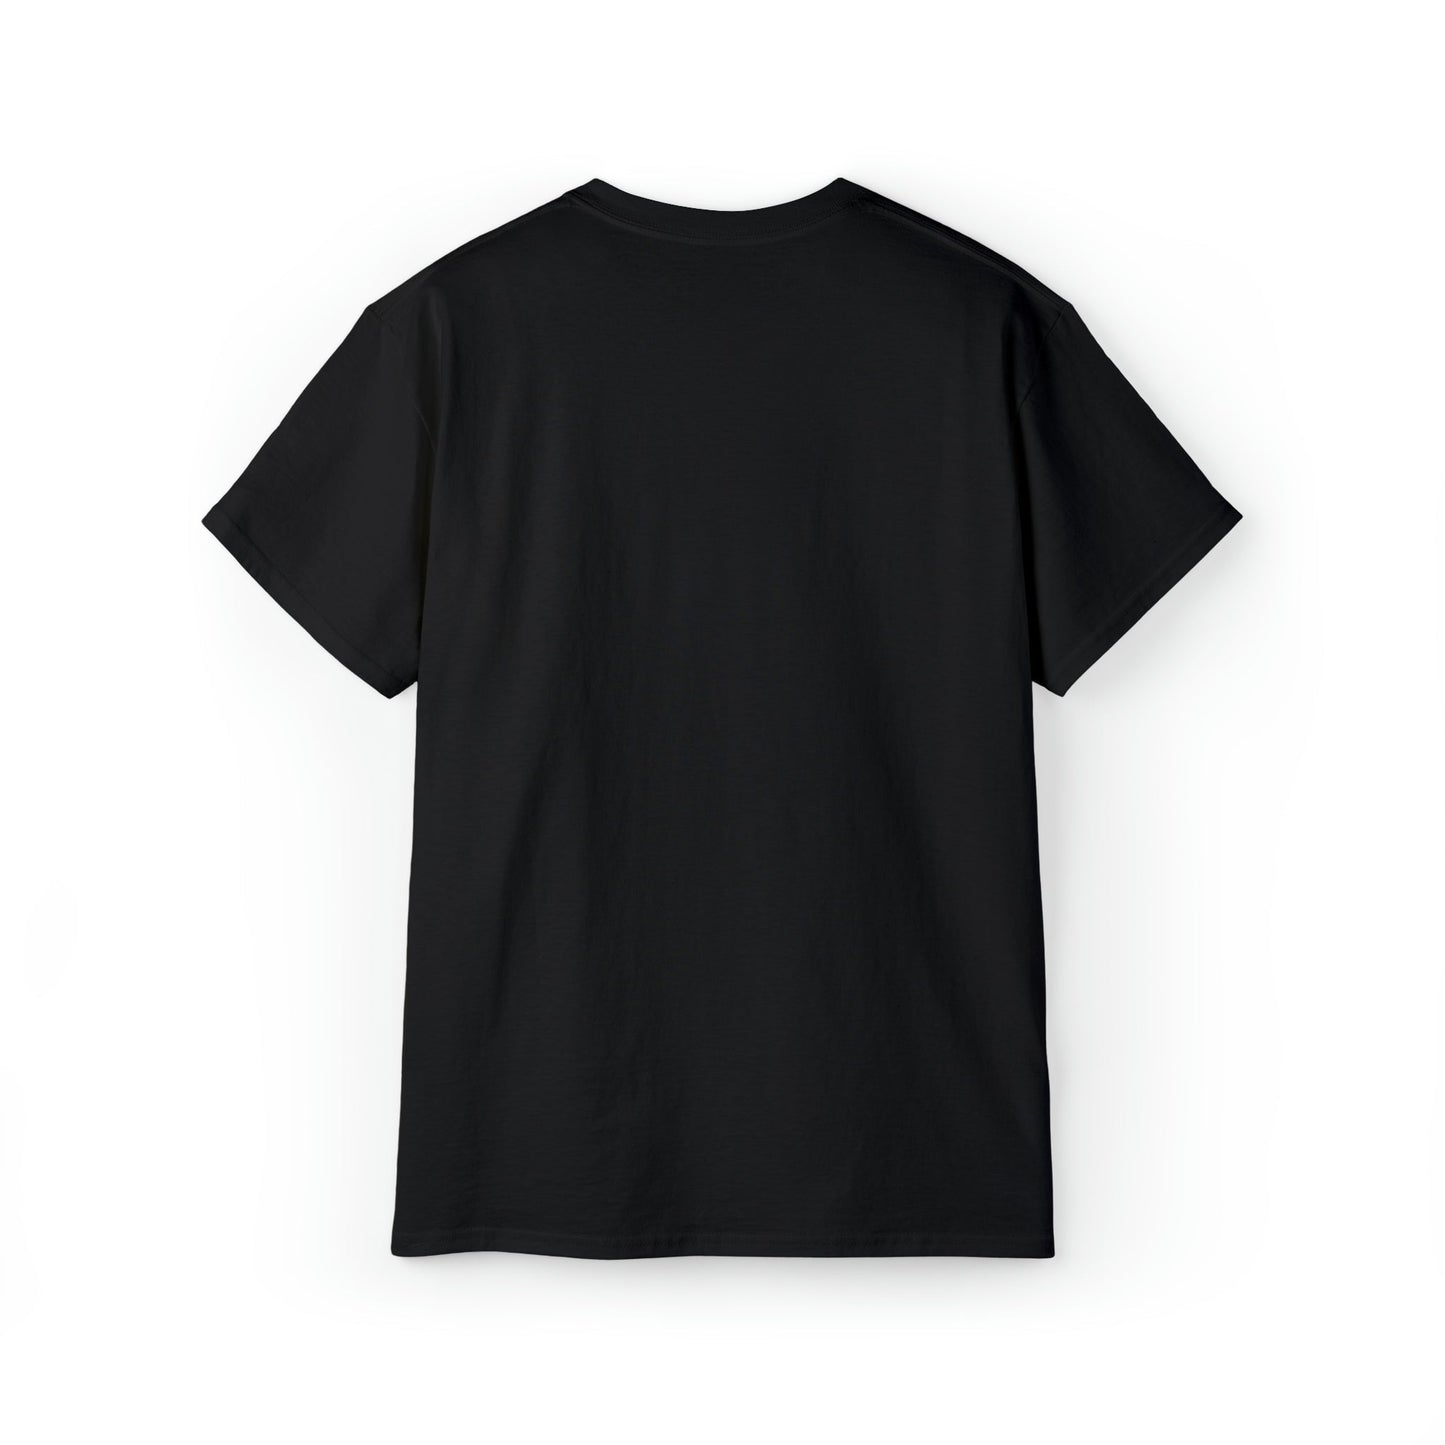 Printify T-Shirt Othala Flaming Rune V.K.N.G™  T-shirt